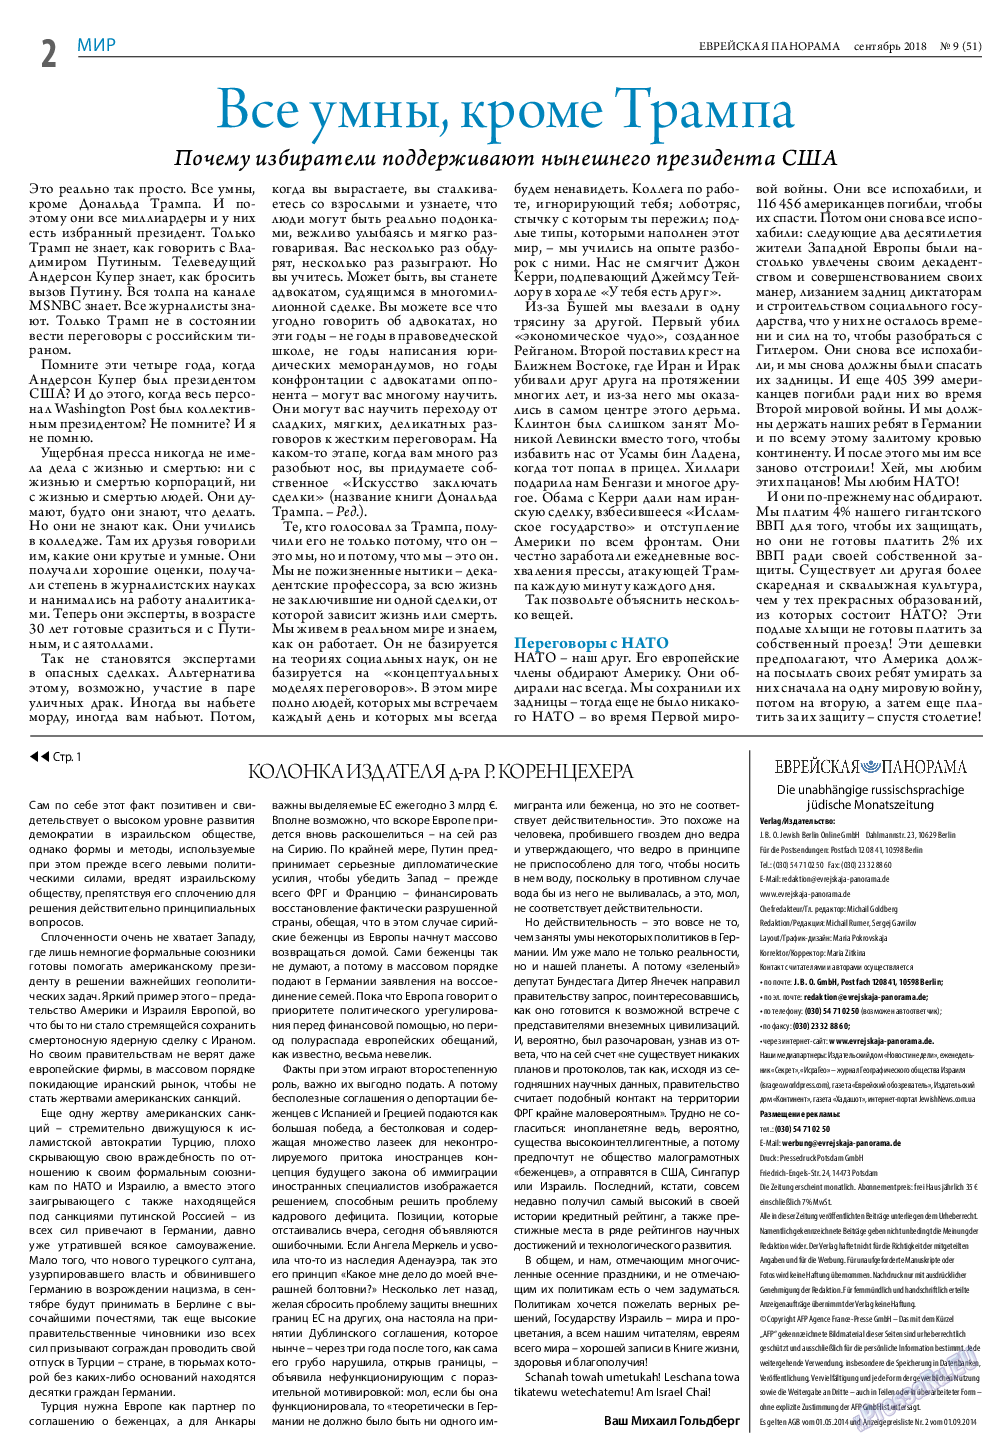 Еврейская панорама, газета. 2018 №9 стр.2